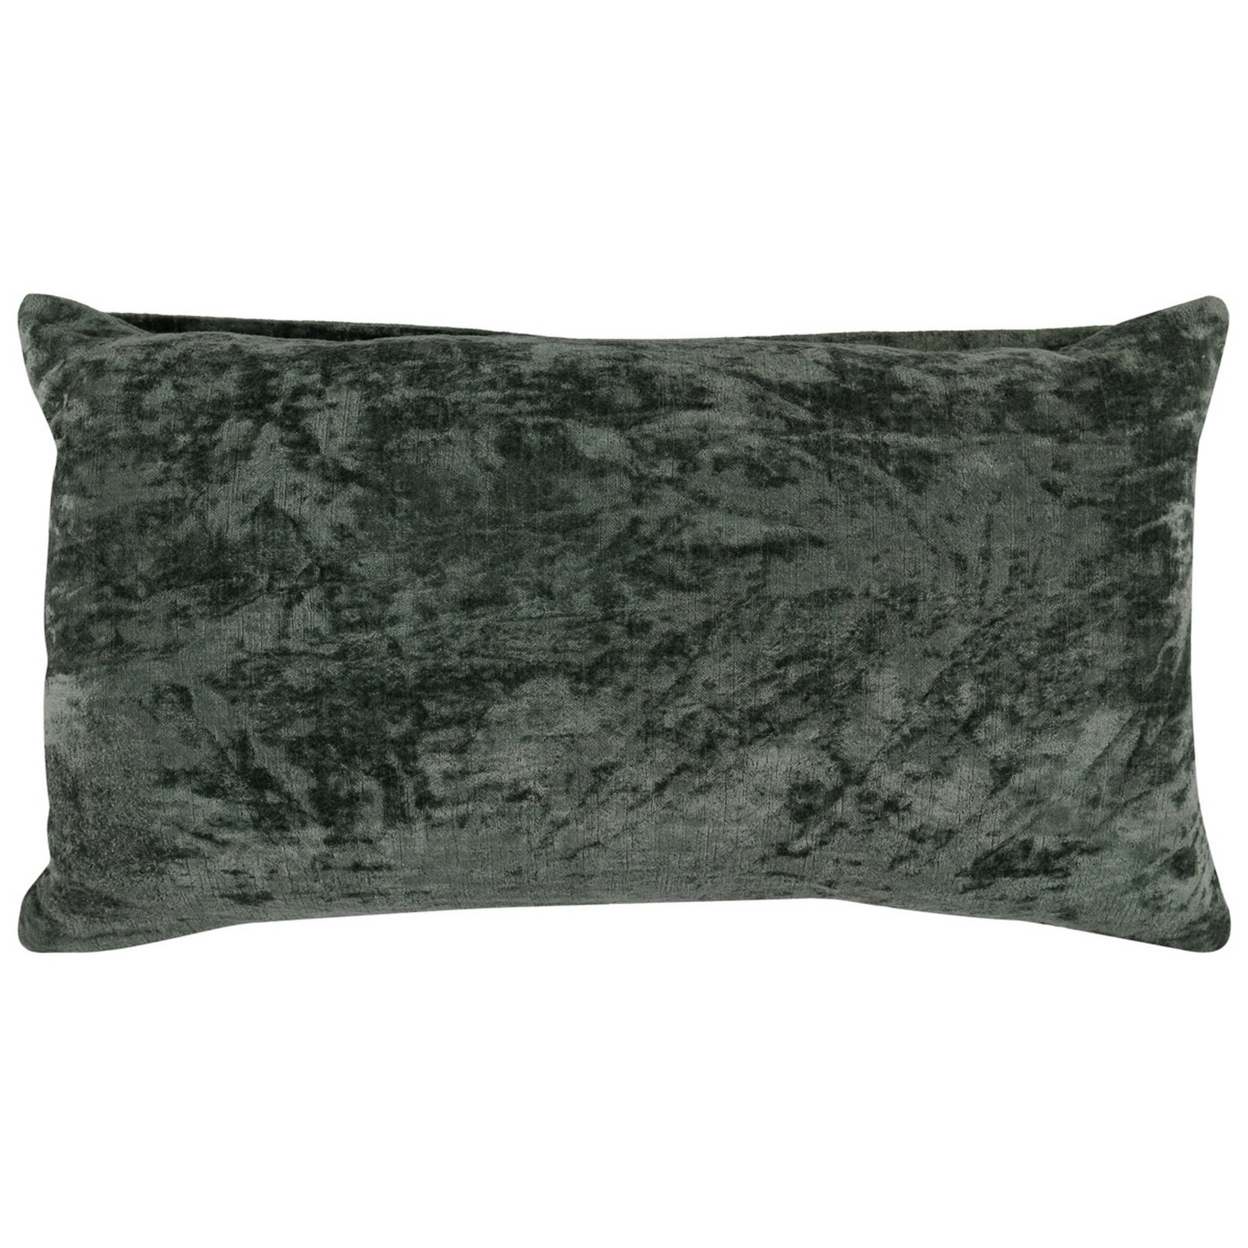 14 X 26 Lumbar Accent Throw Pillow, Hand Pleated, Vintage, Forest Green- Saltoro Sherpi